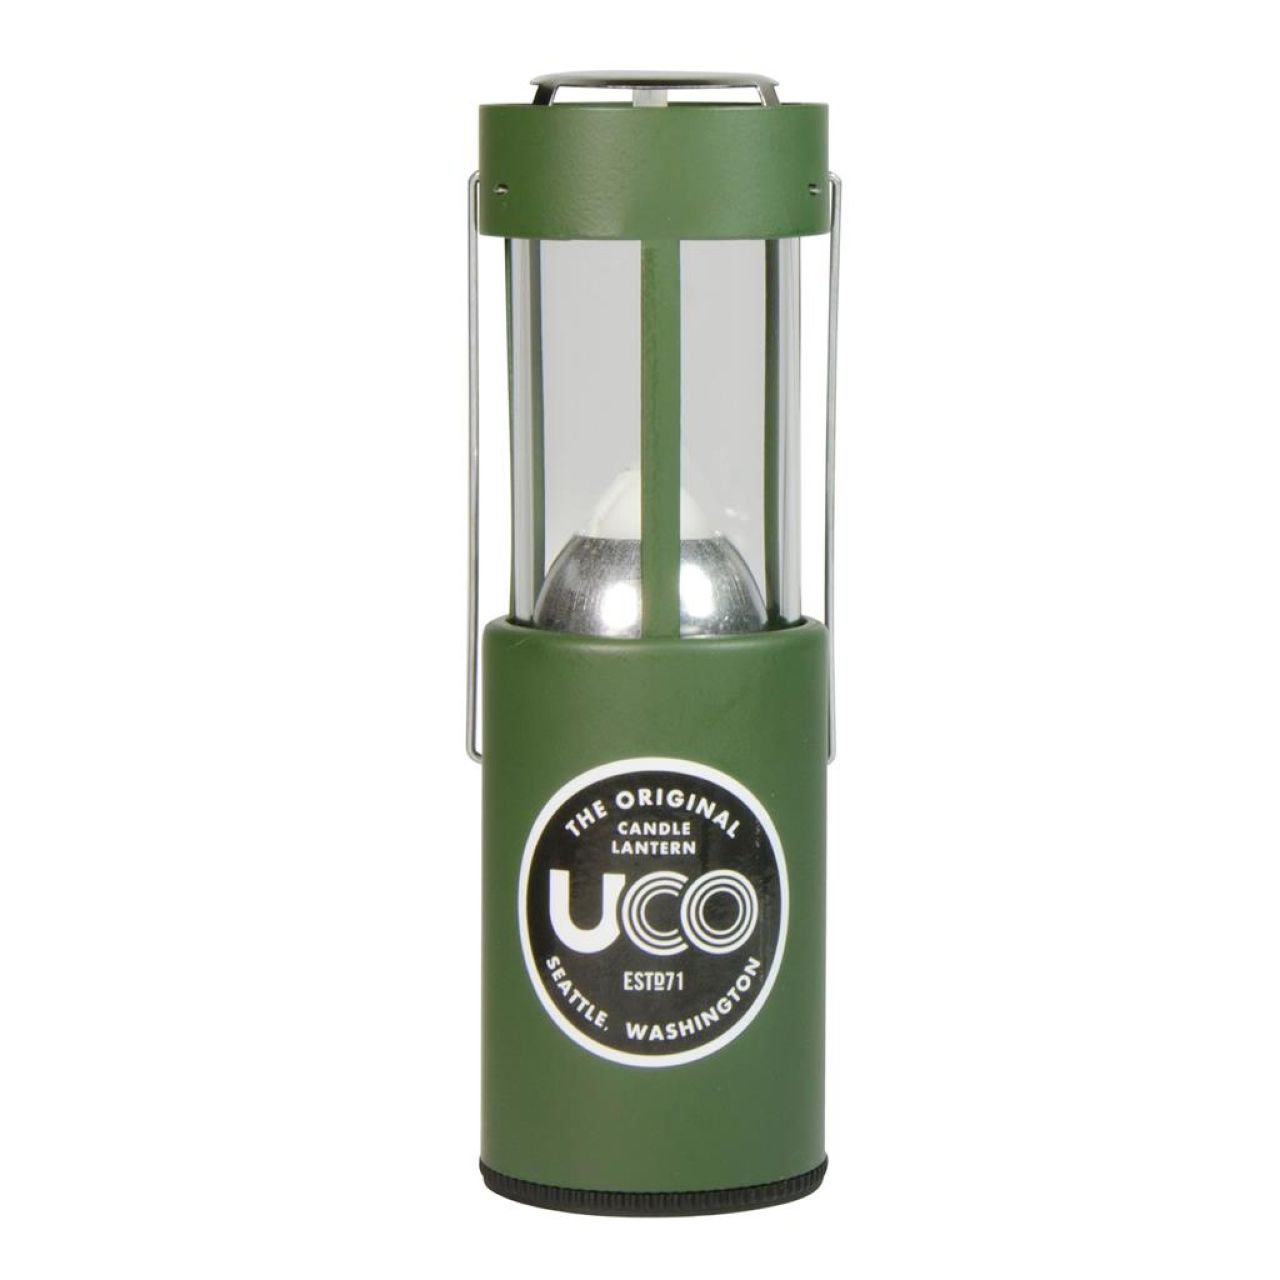 UCO Mini Tealight Candle Lantern Kit 2.0 in Green - Camping